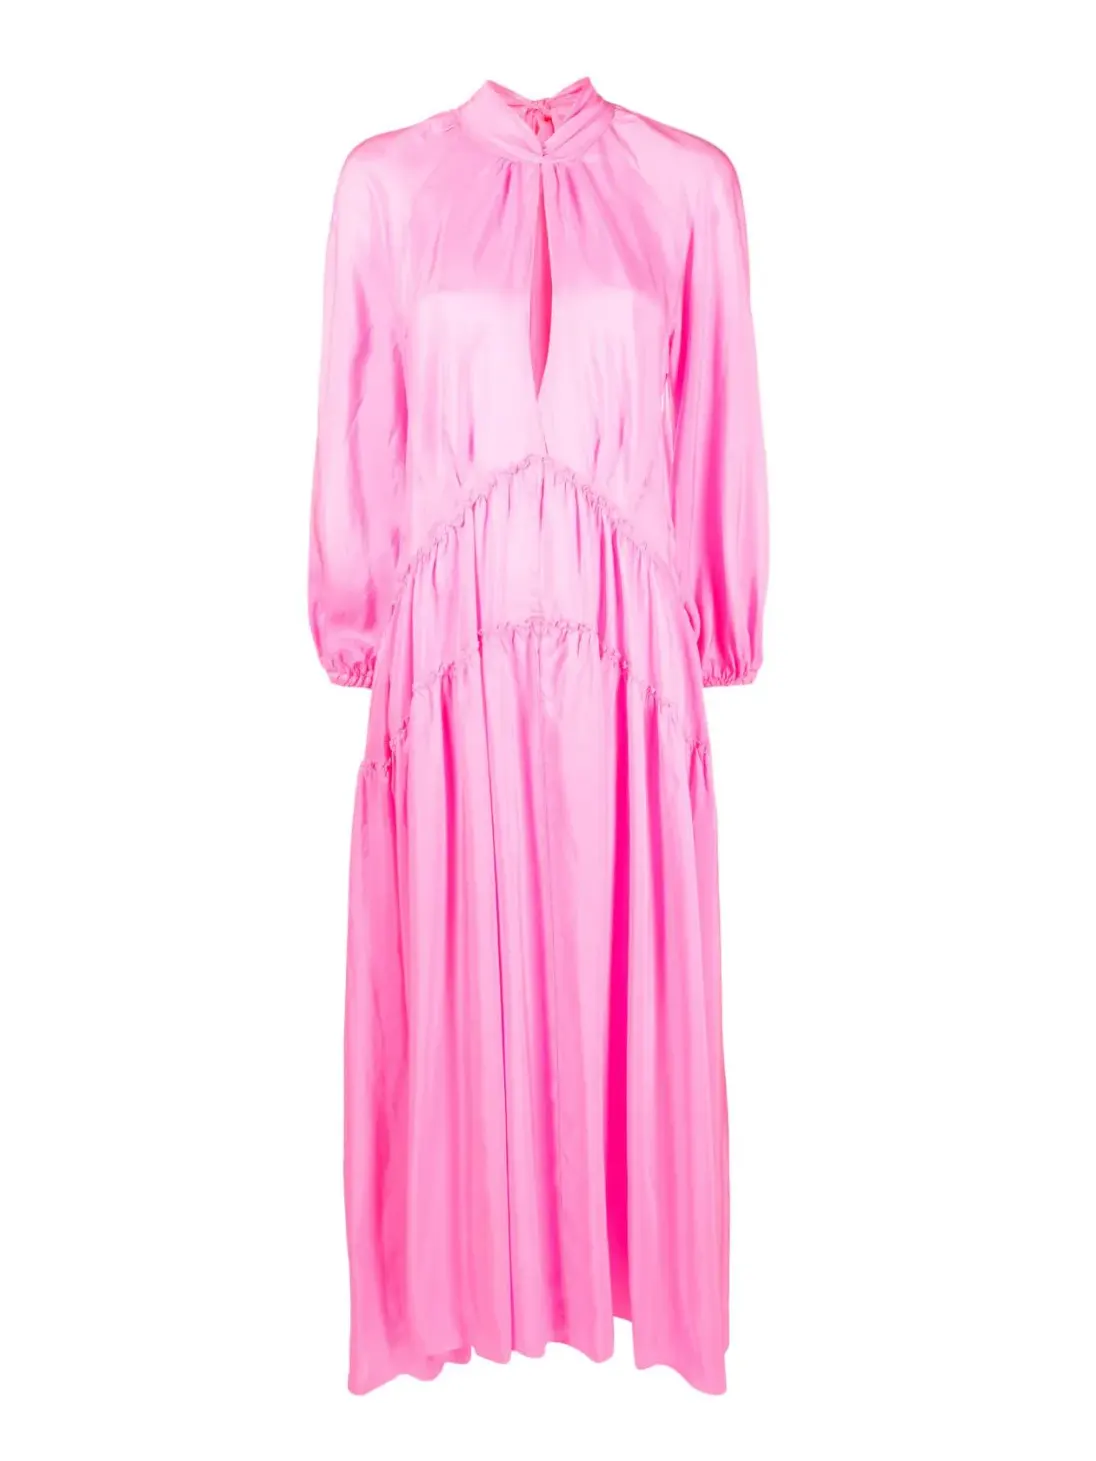 Silk long sleeves dress, pink